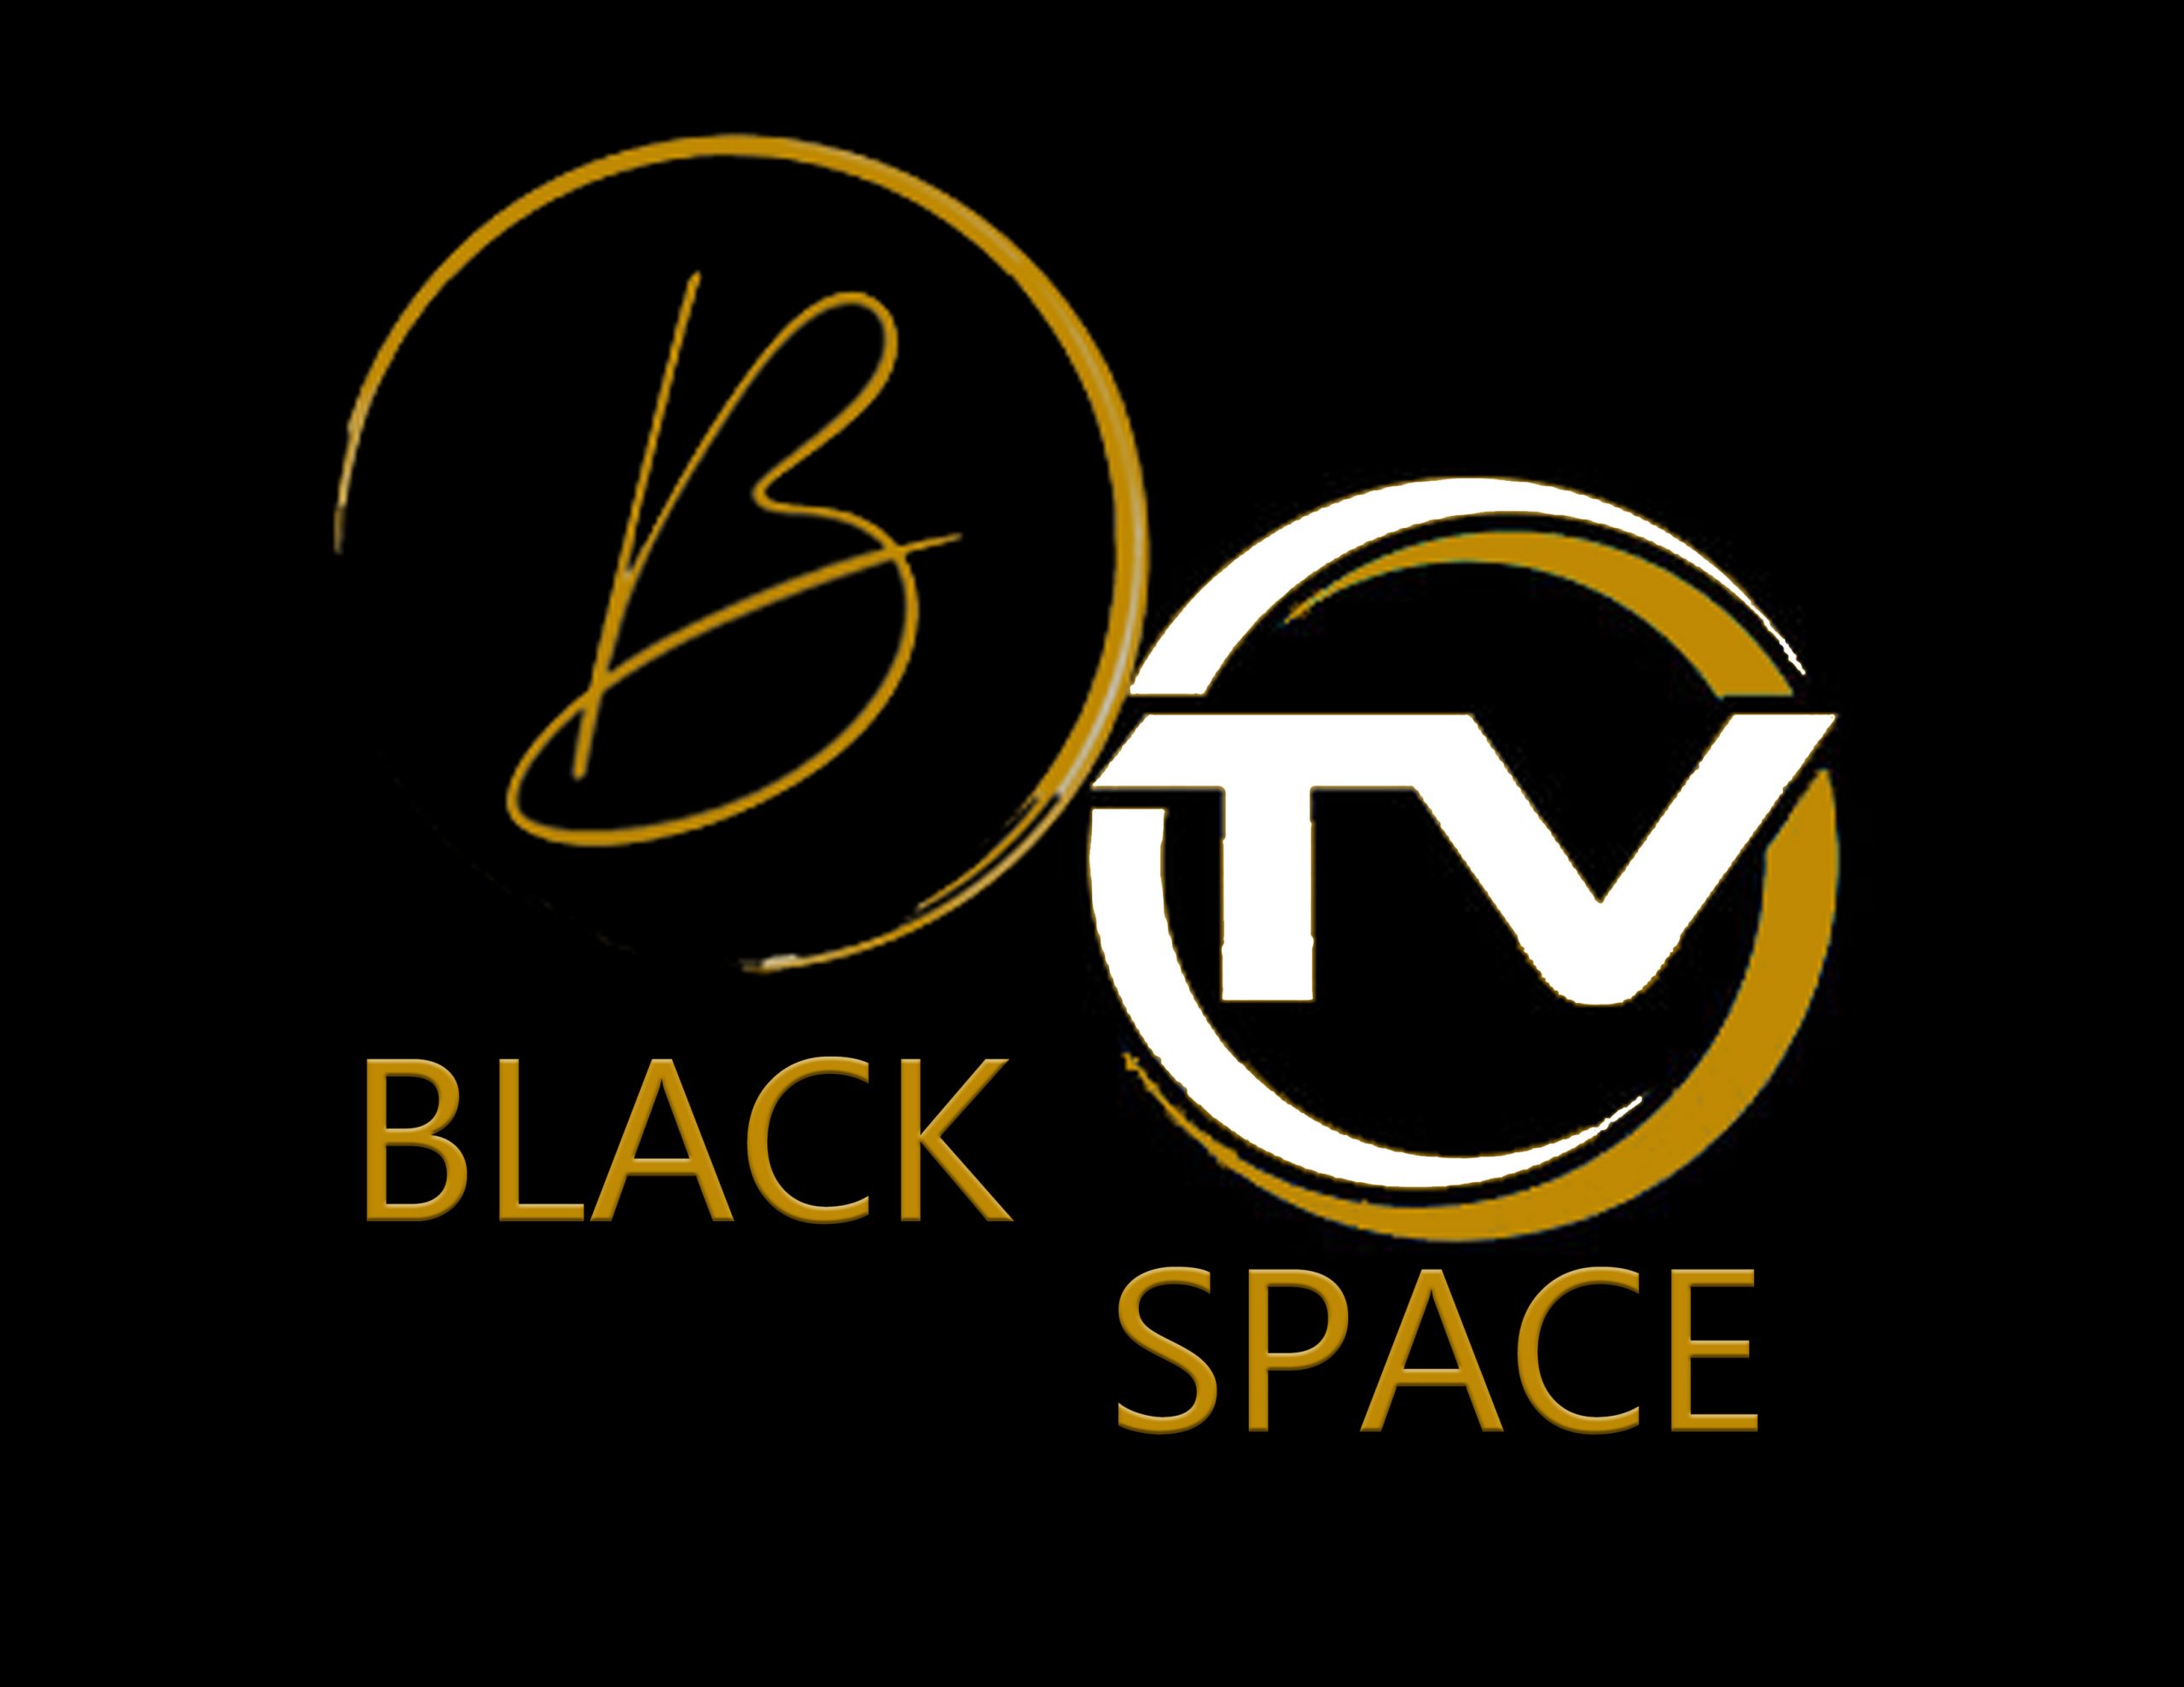 Black Space TV